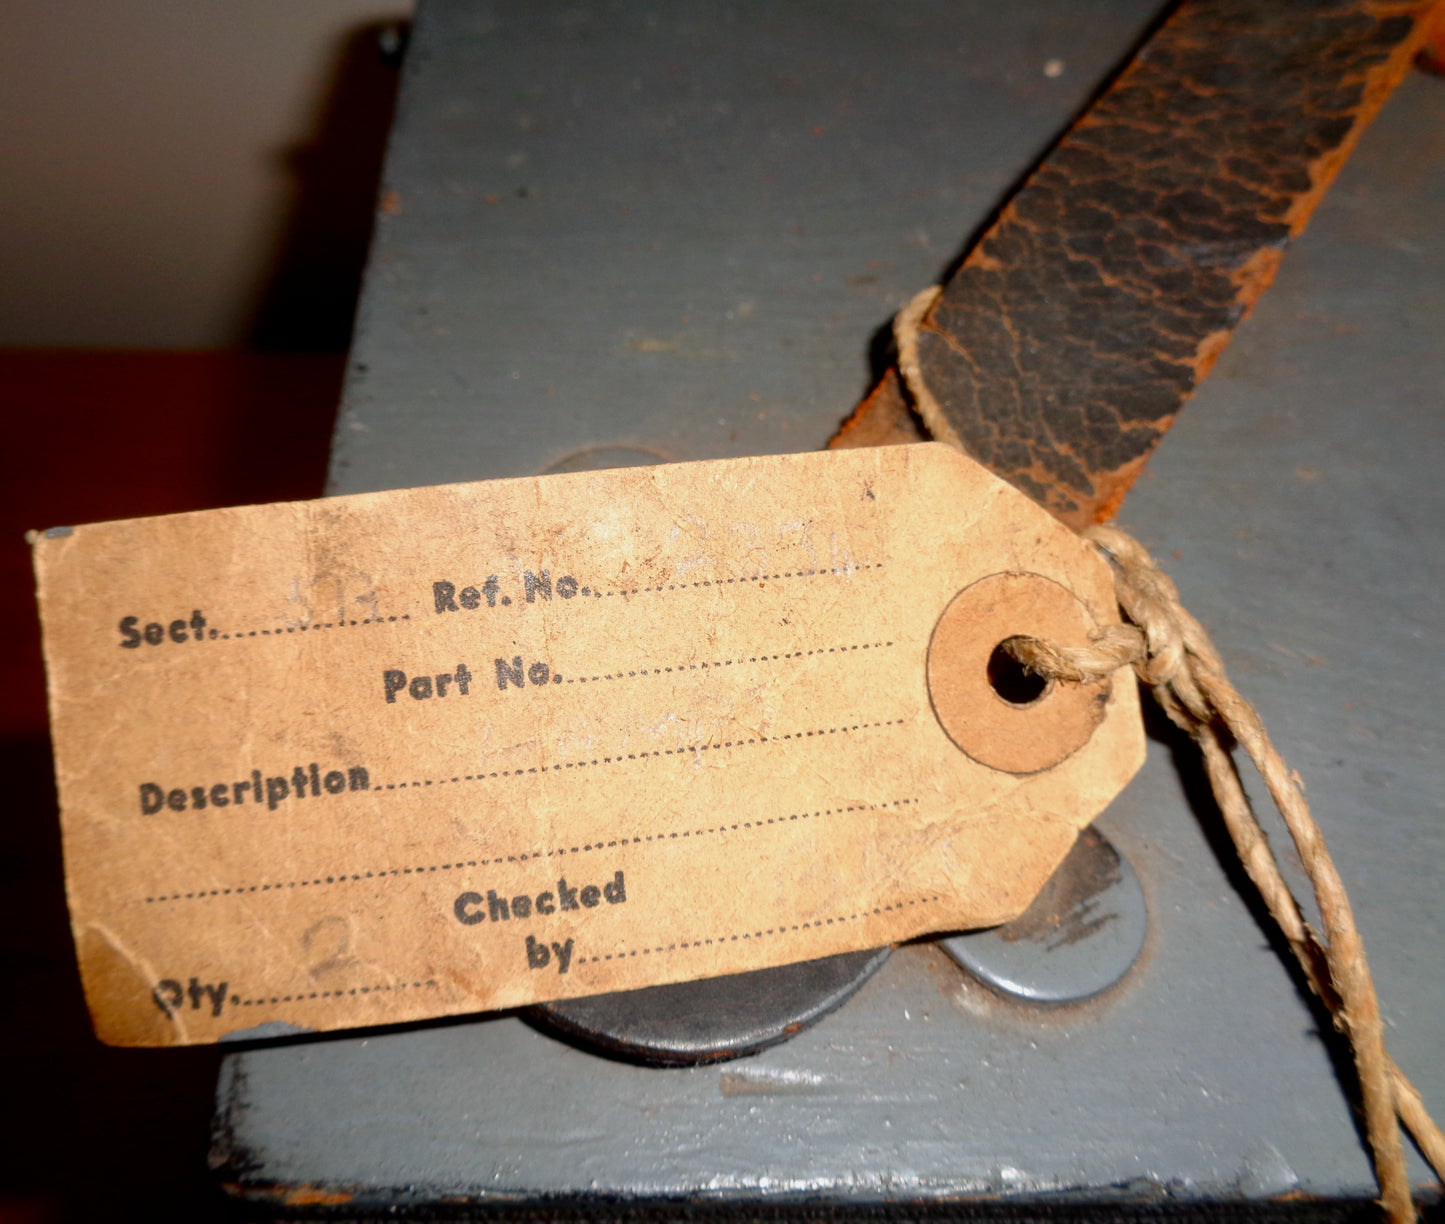 WW2 RAF Aldis Morse code Signalling Lamp B 5A/2334 in its original grey wooden box